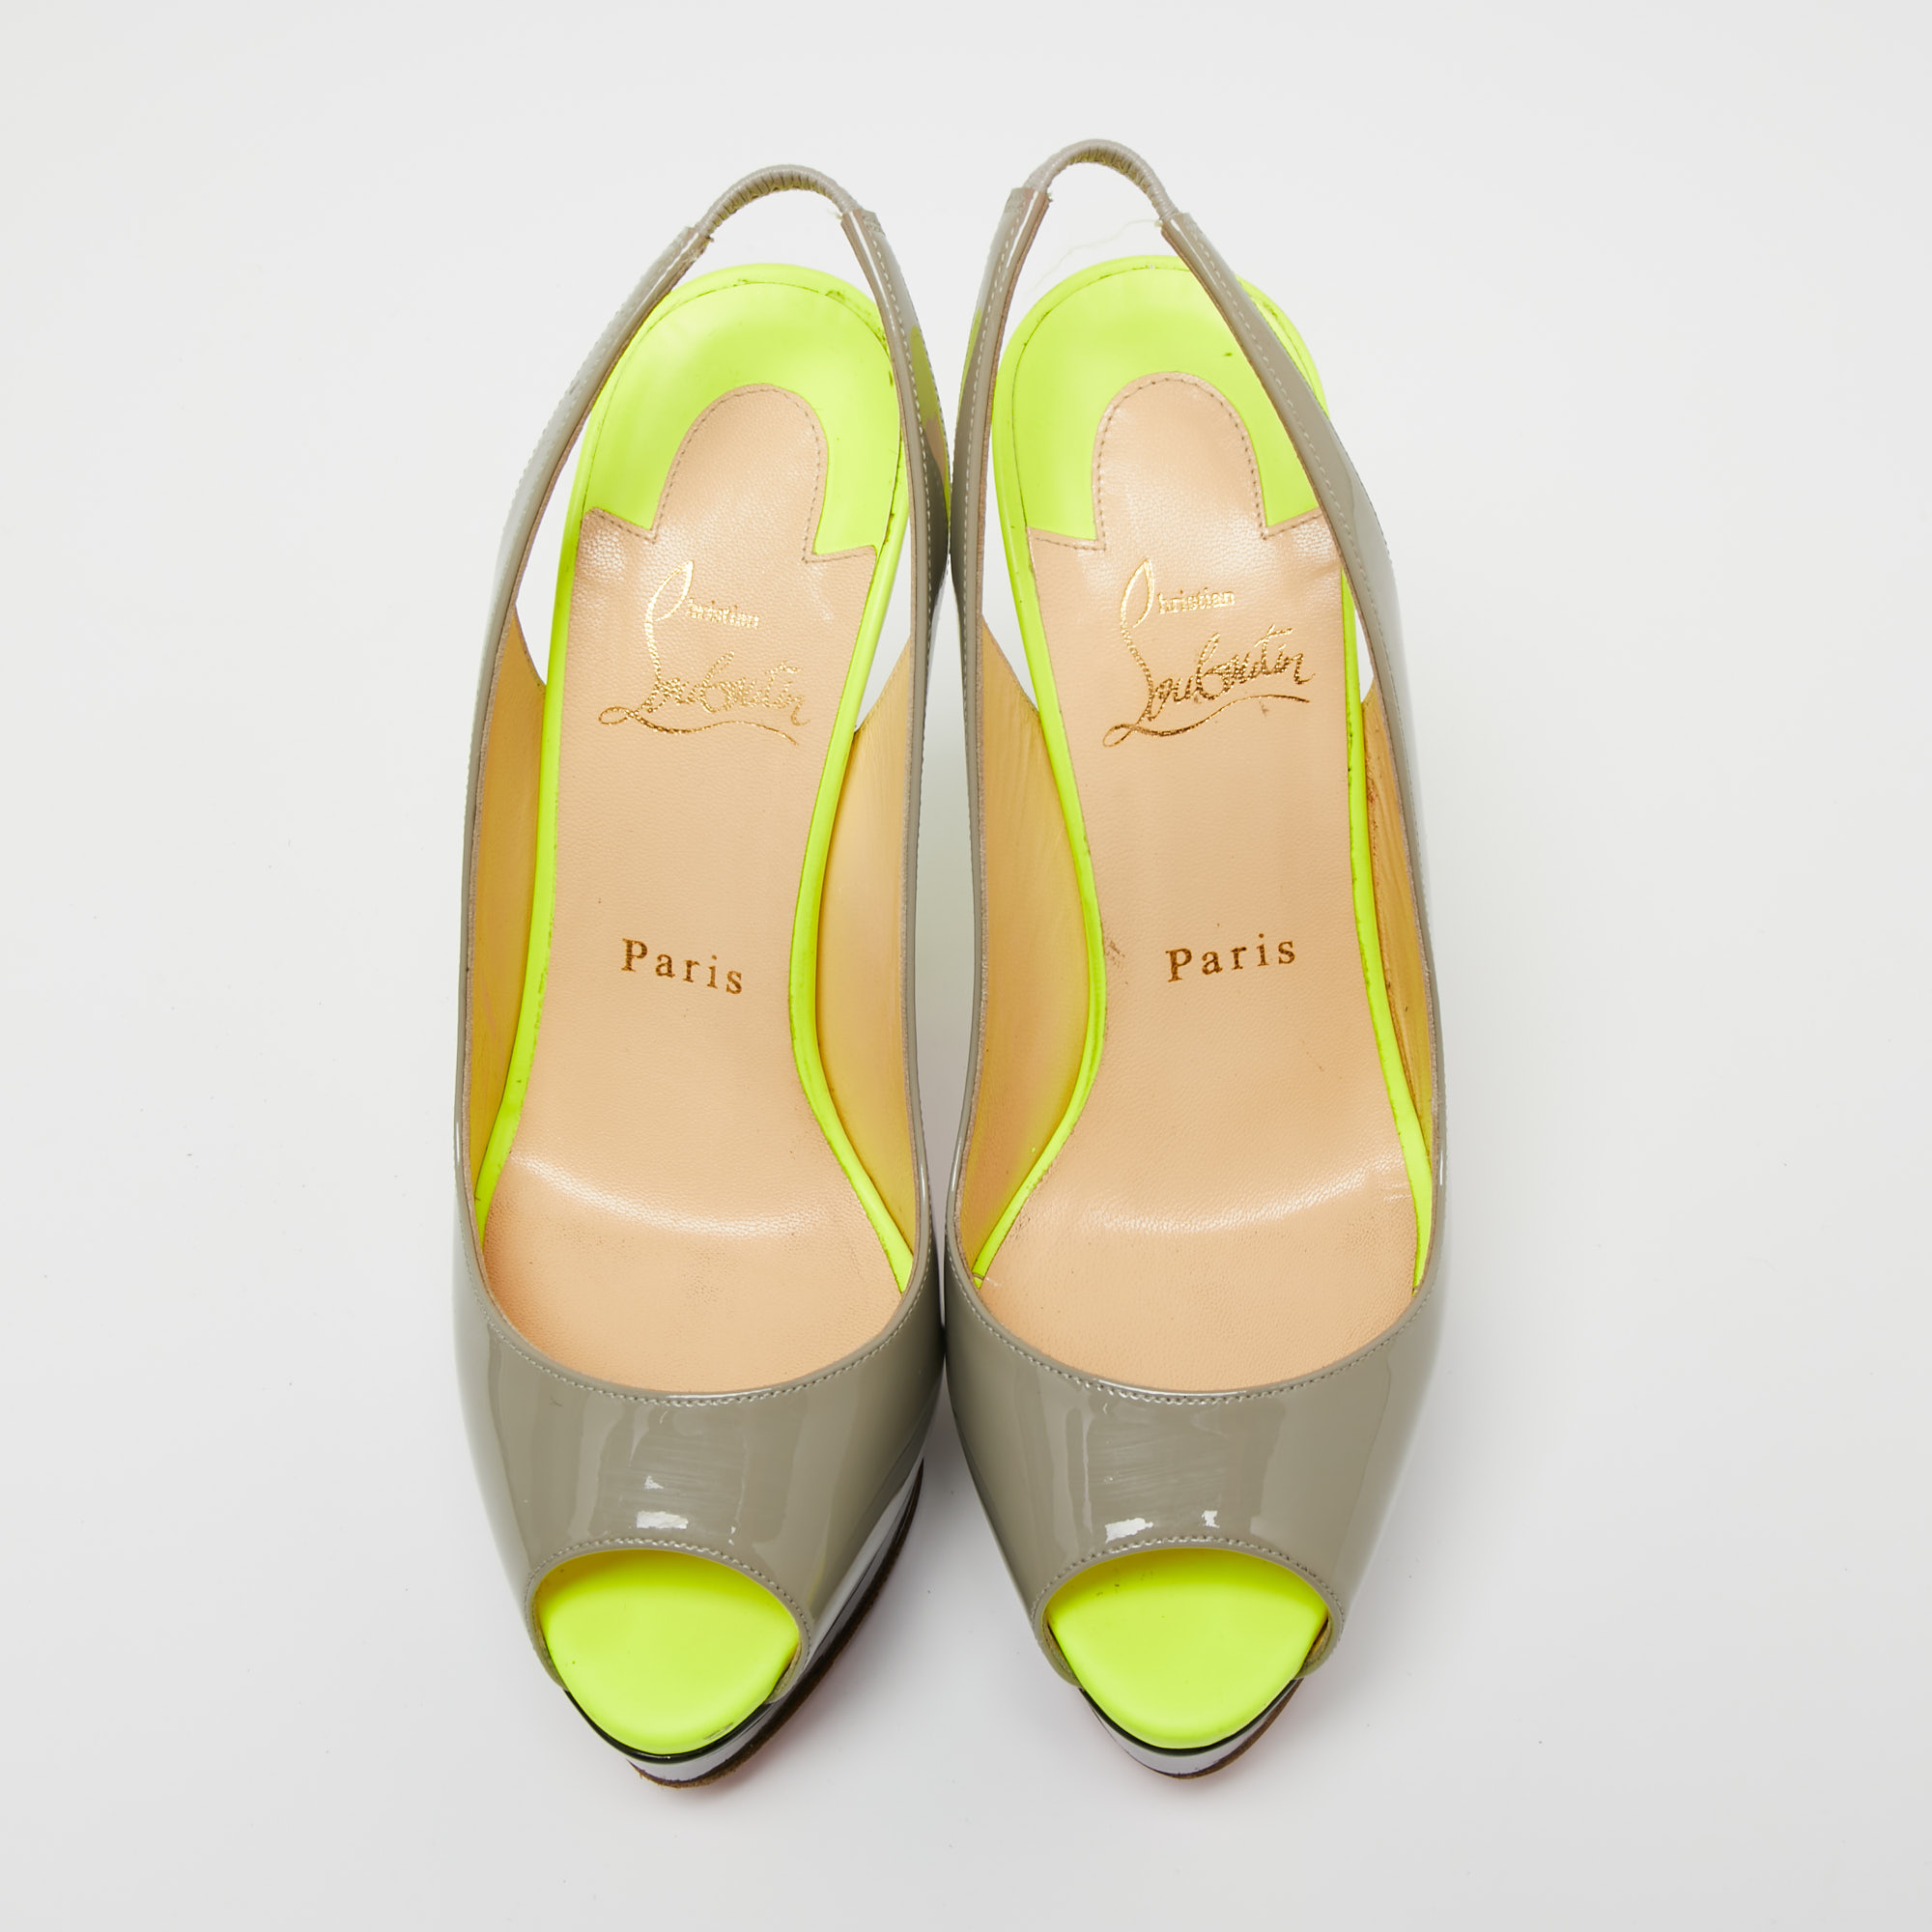 Christian Louboutin Tri-Color Patent Leather Lady Peep-Toe Slingback Sandals Size 37.5